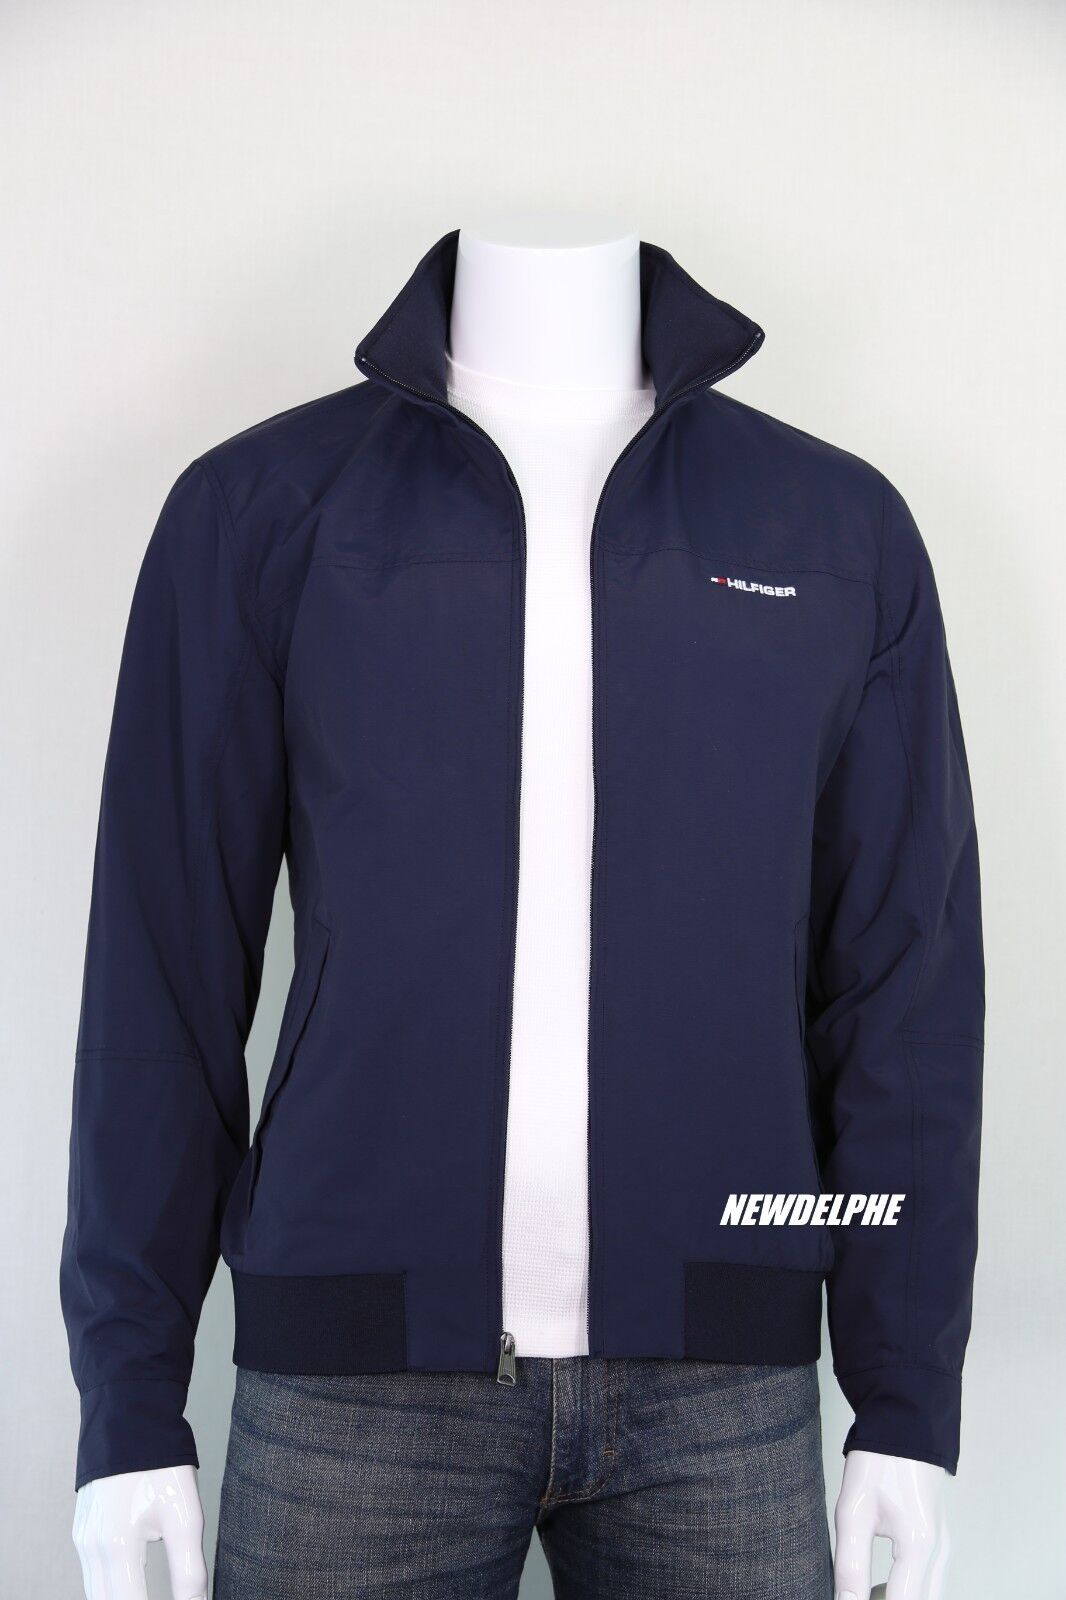 Tommy Hilfiger Men's Jacket Size Medium M Color NavyBlue 2 